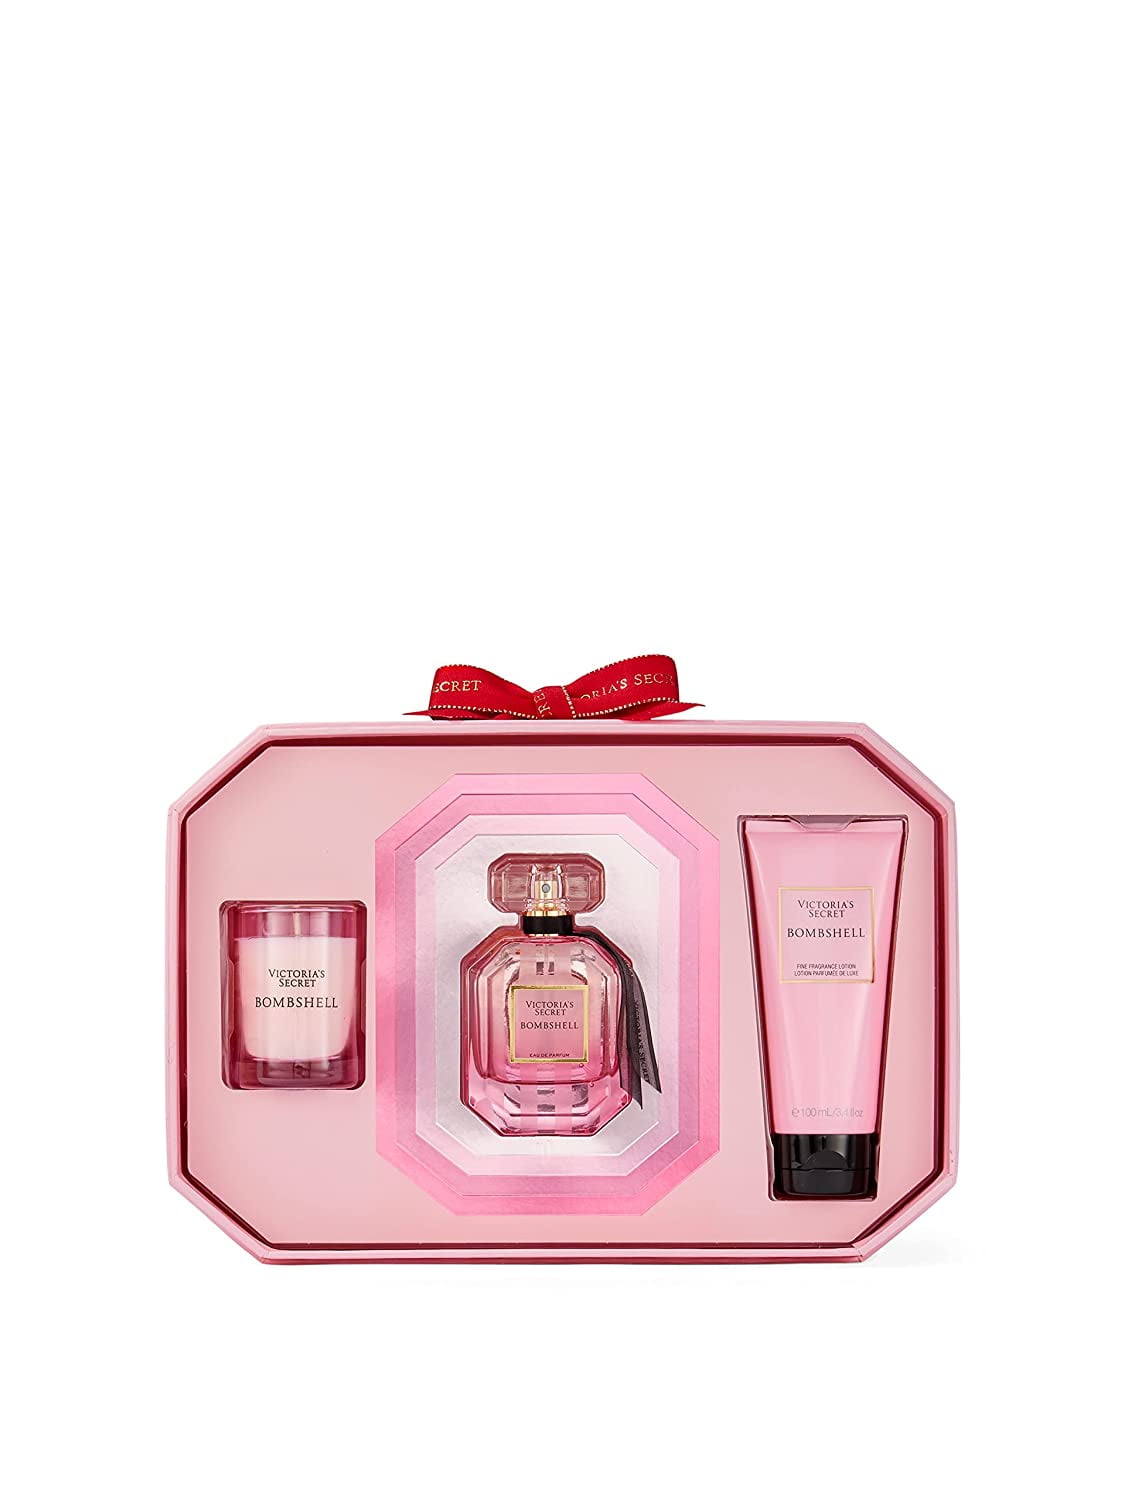  Victoria's Secret Bare 3 Piece Luxe Fragrance Gift